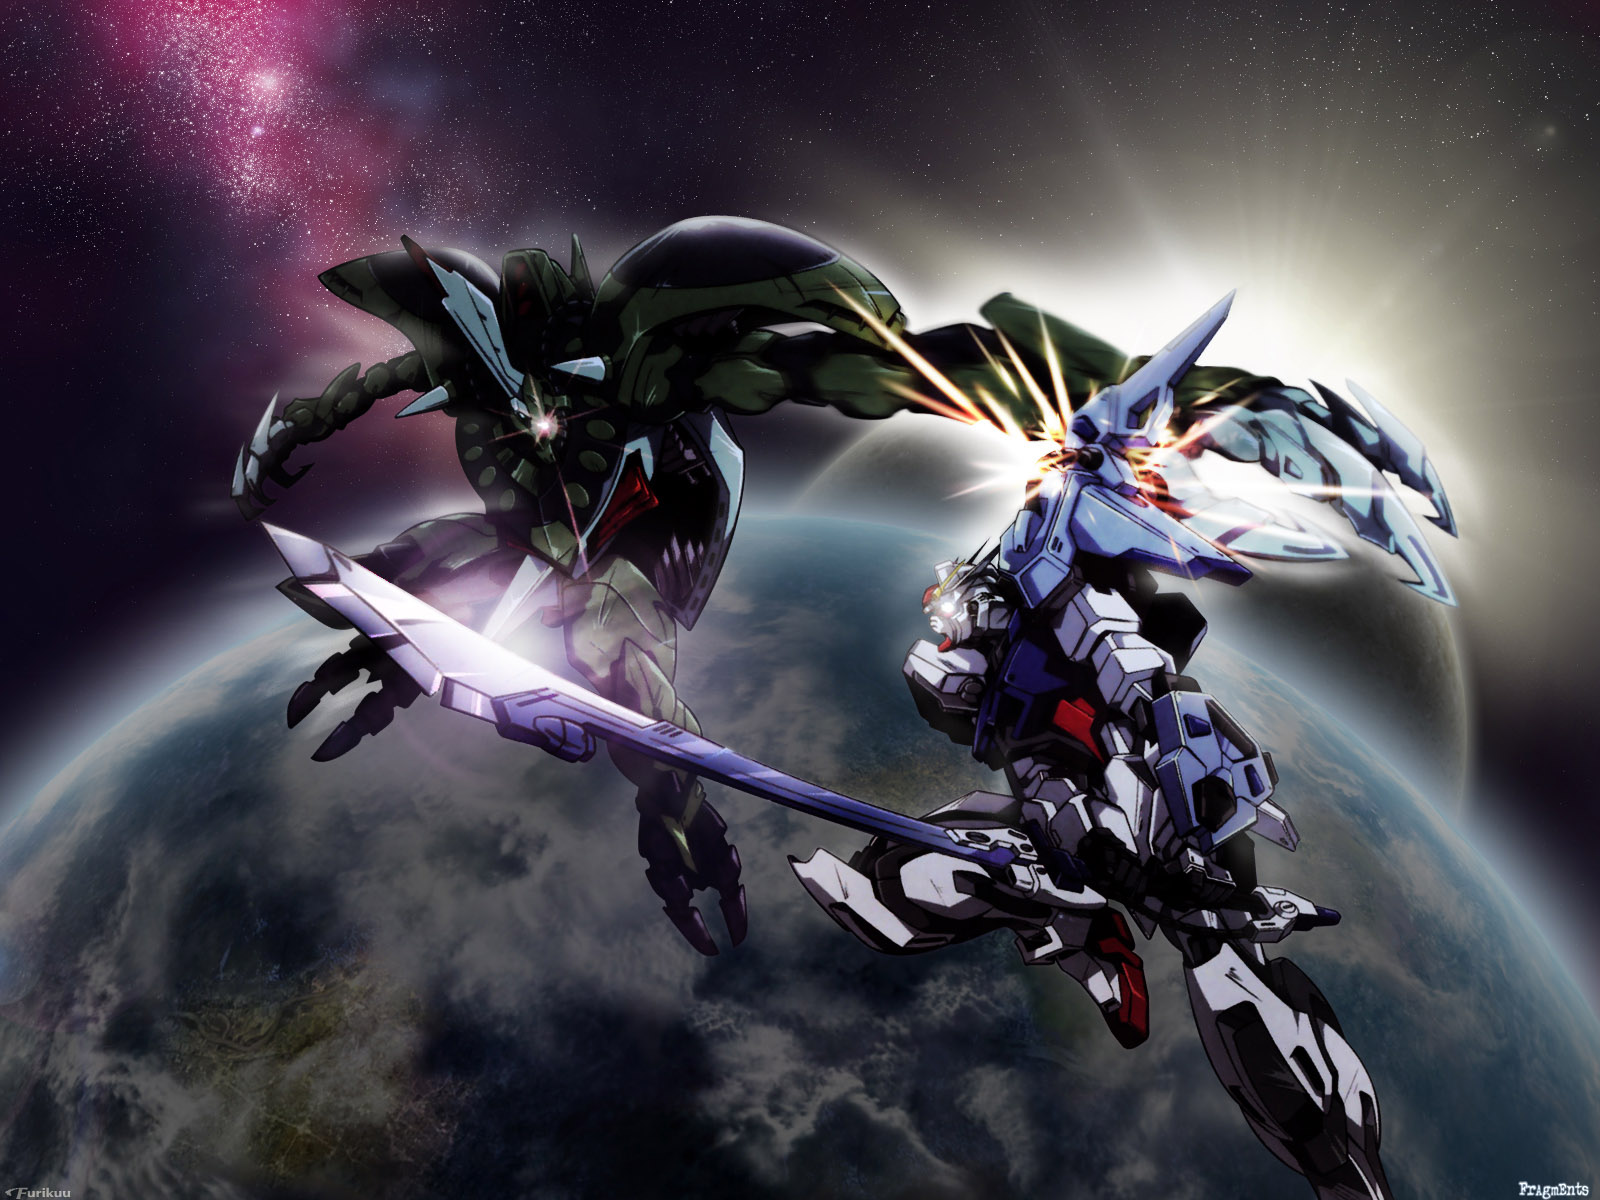 Yamane Ishi's current wallpaper on Gunshin. From: Gundam SEED